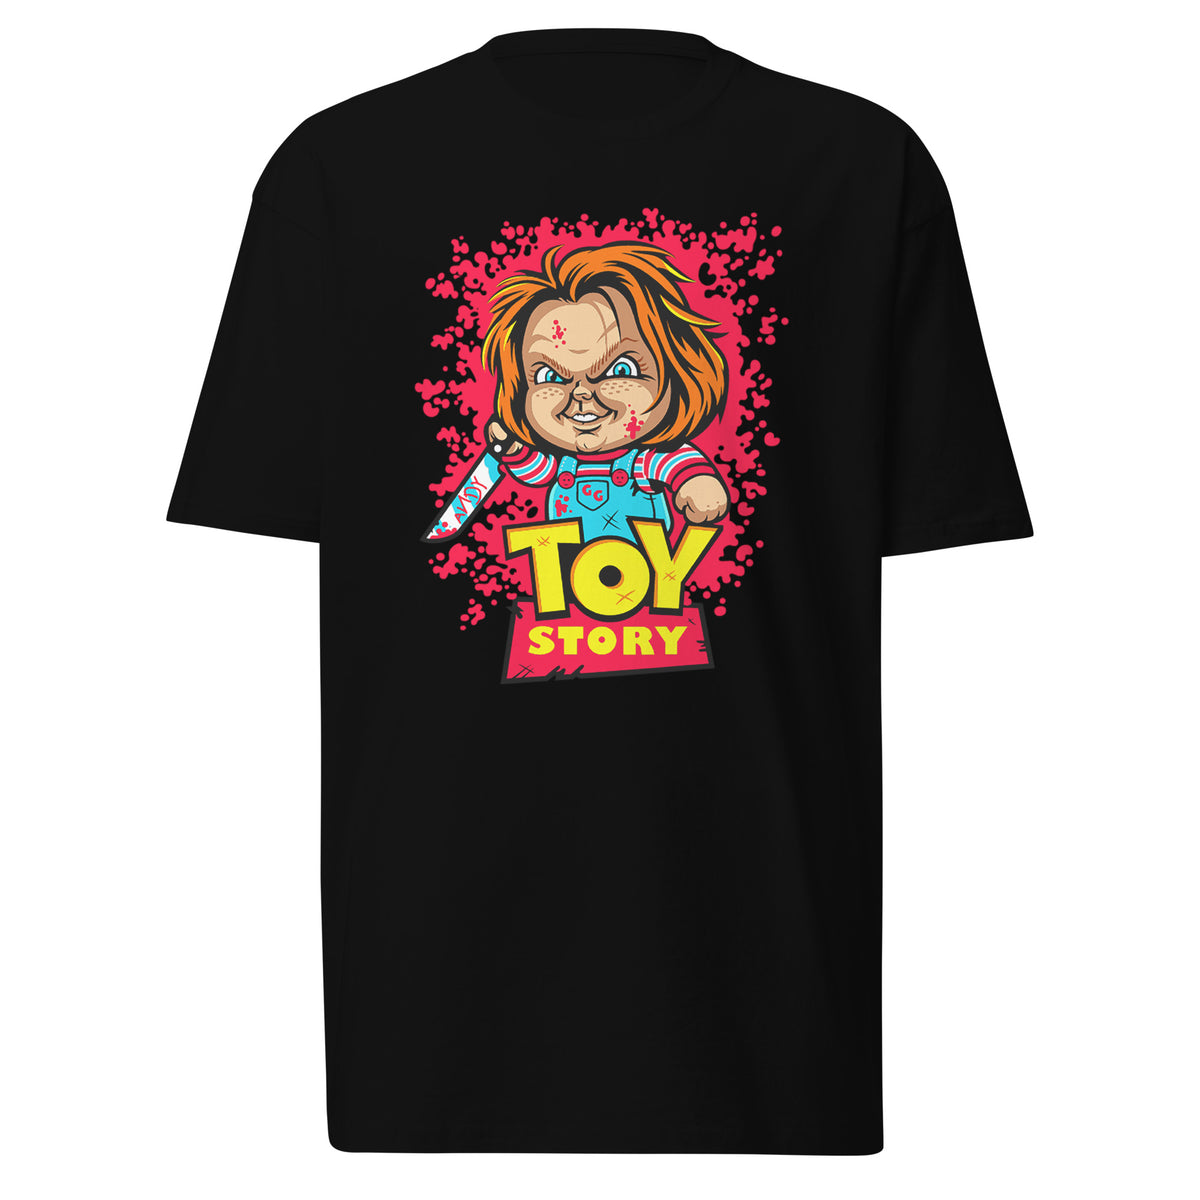 Men’s Chucky Toy Story T-Shirt